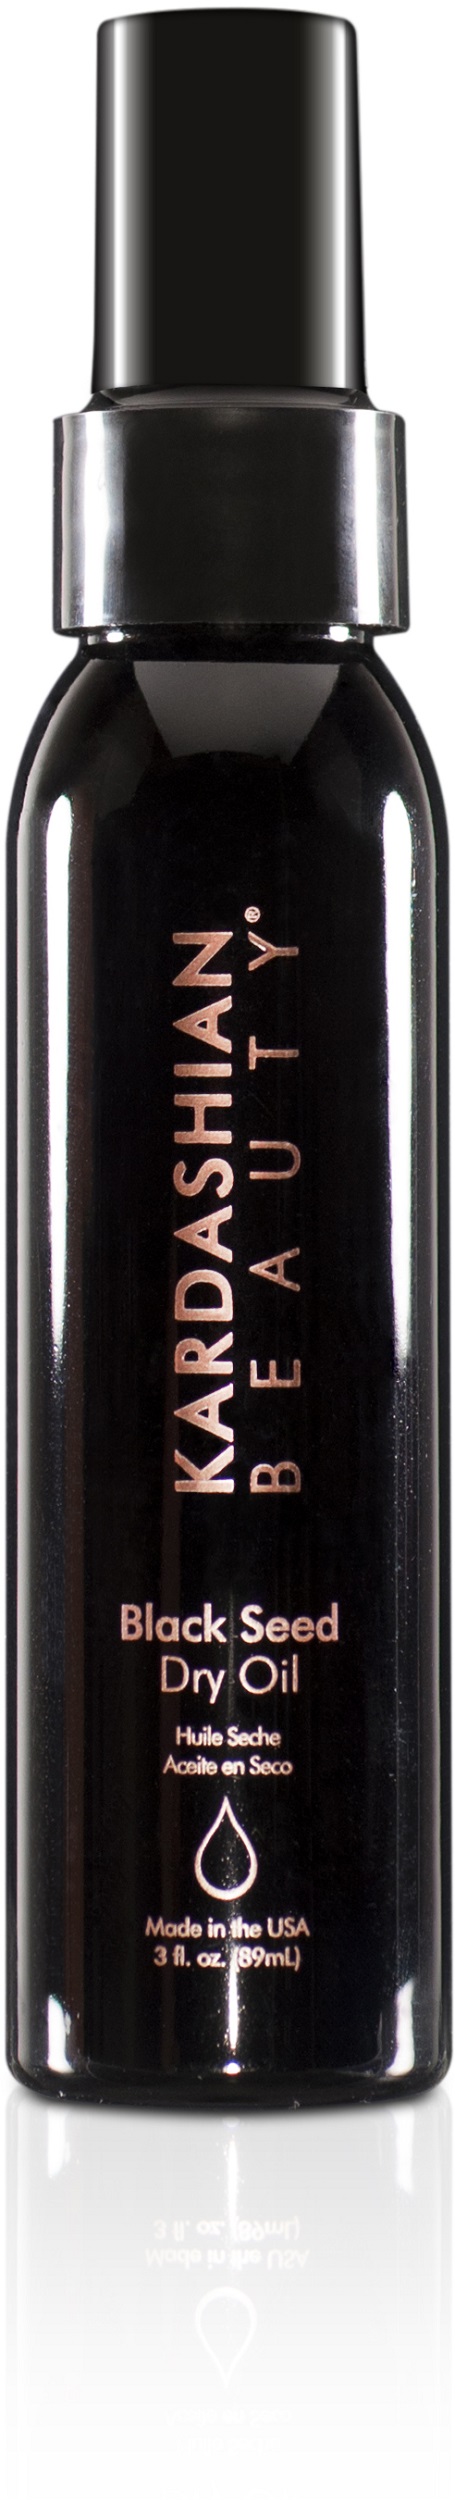 Kardashian Black Seed Dry Oil 89ml